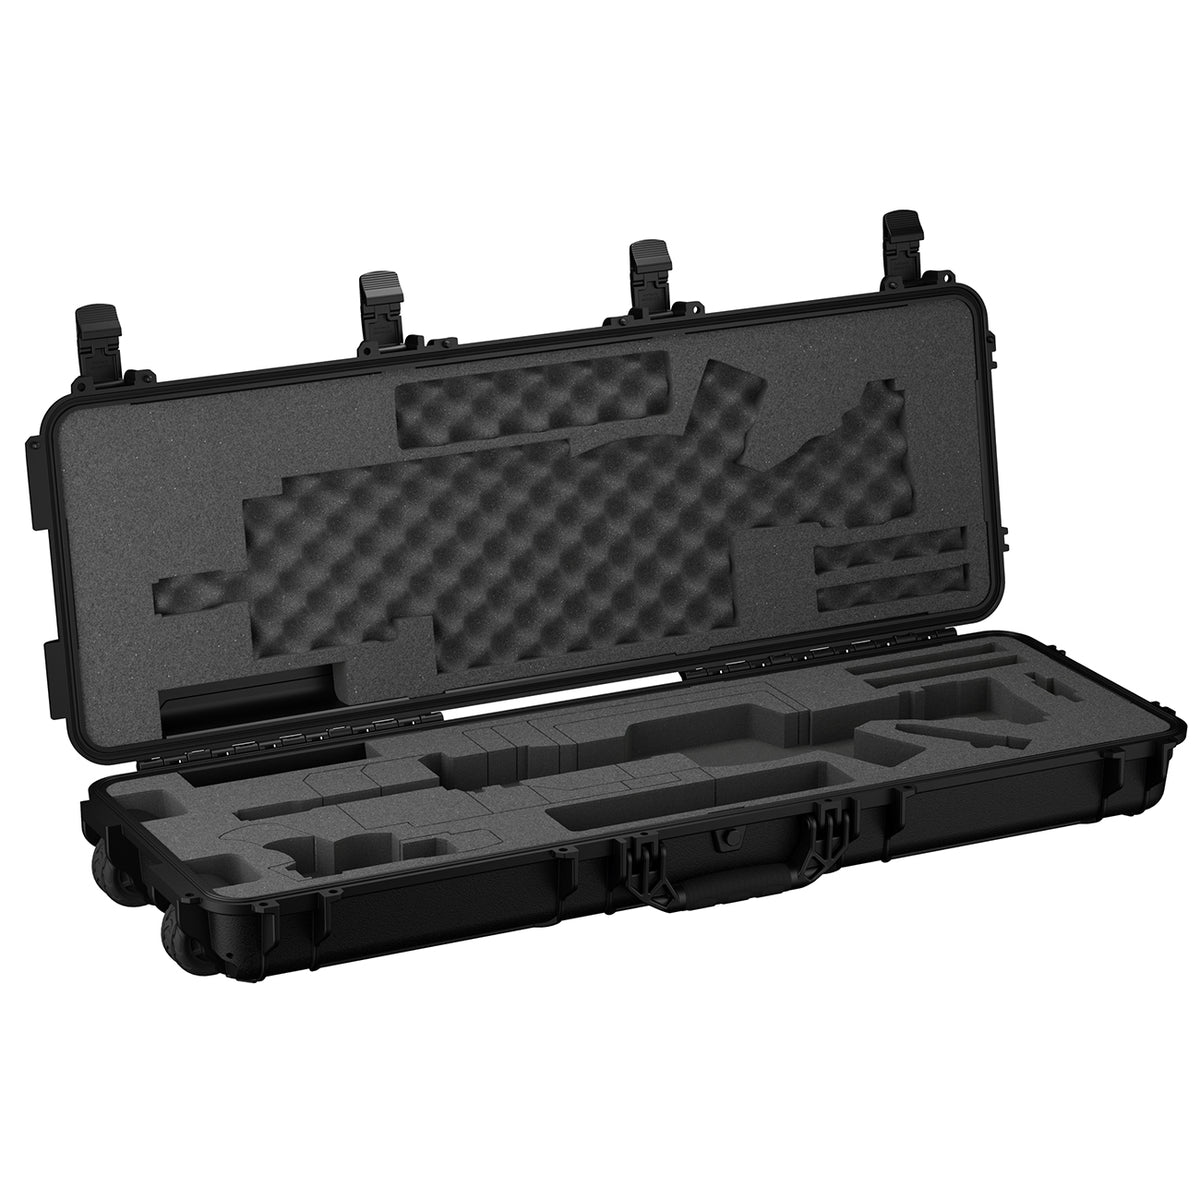 Rifle Cases - Long Waterproof Hard Cases for Rifles & Shotguns